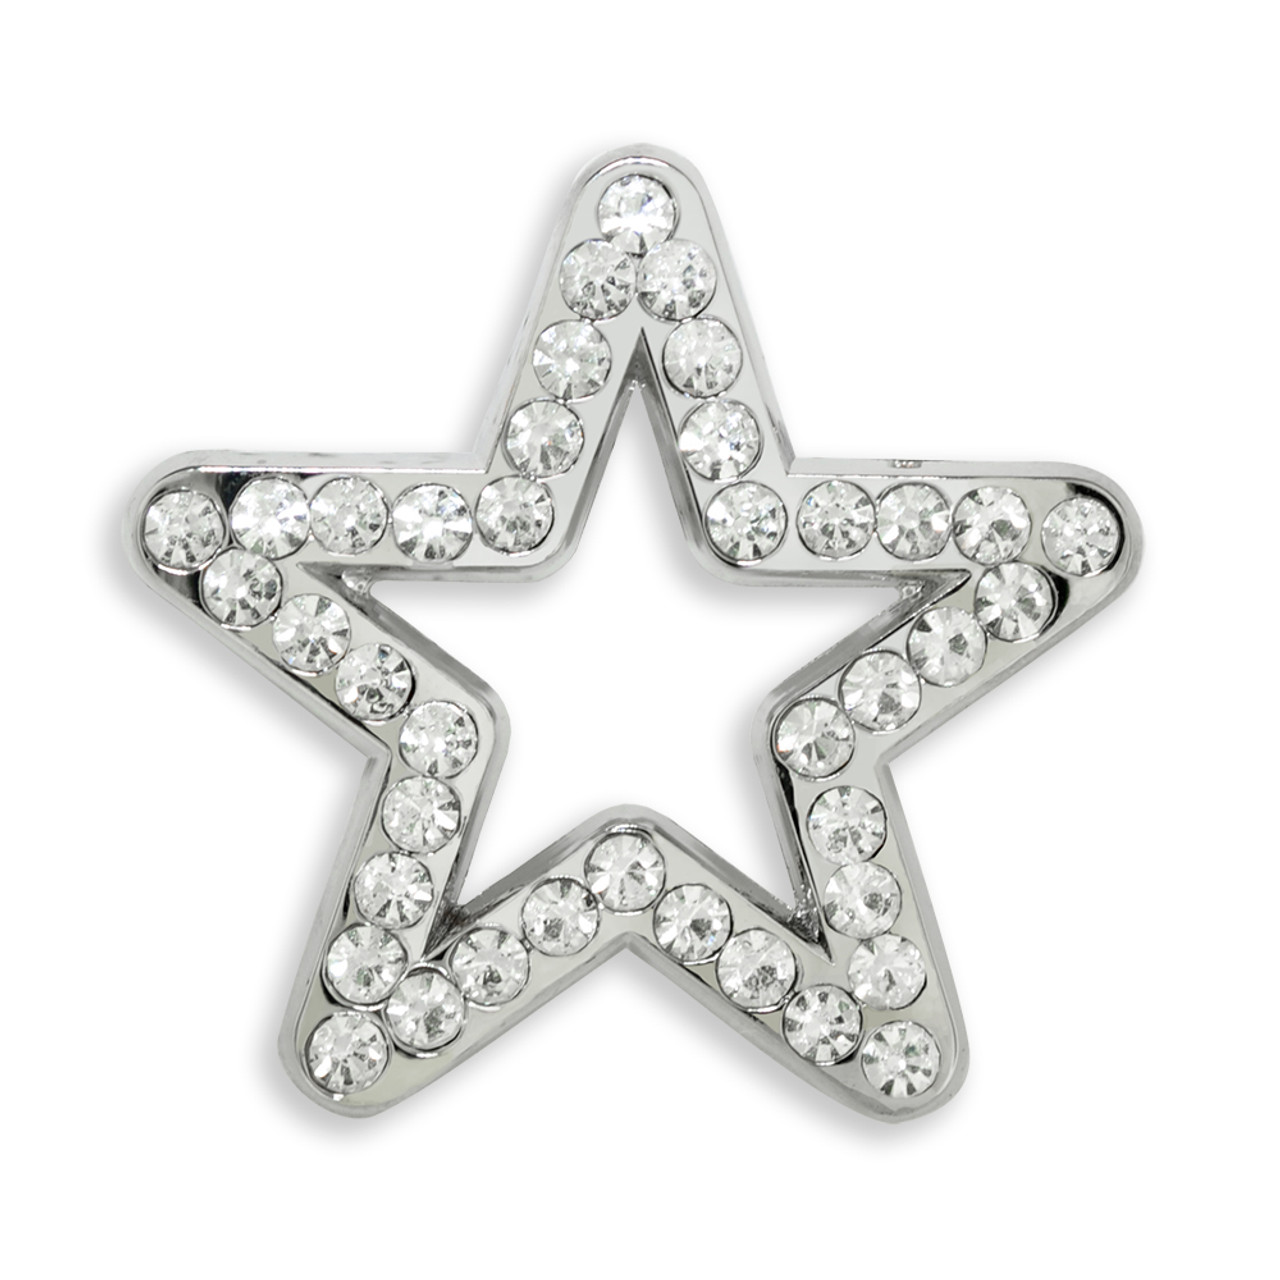 PinMart Silver Plated Shiny Rhinestone Star Brooch Pin